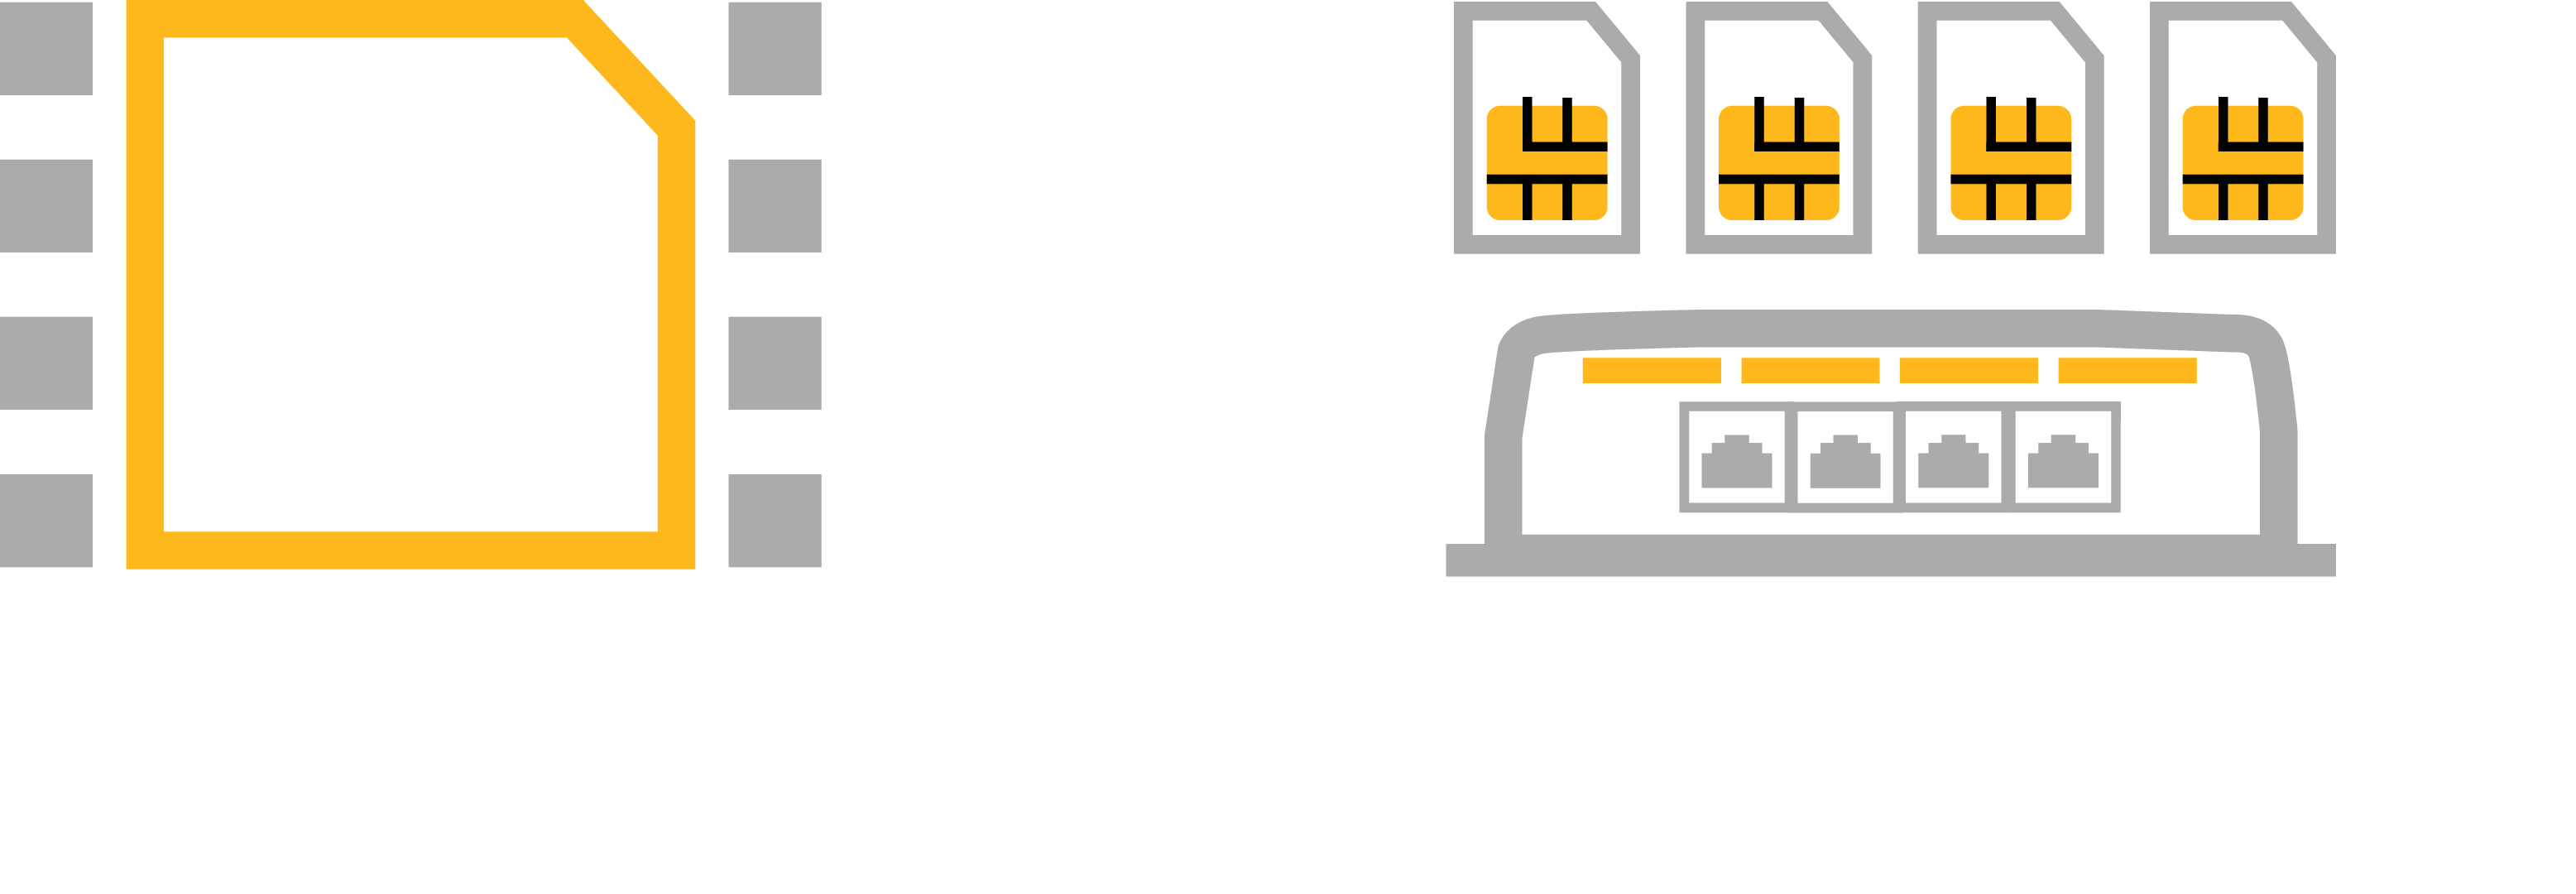 eSIM and SIM Injector